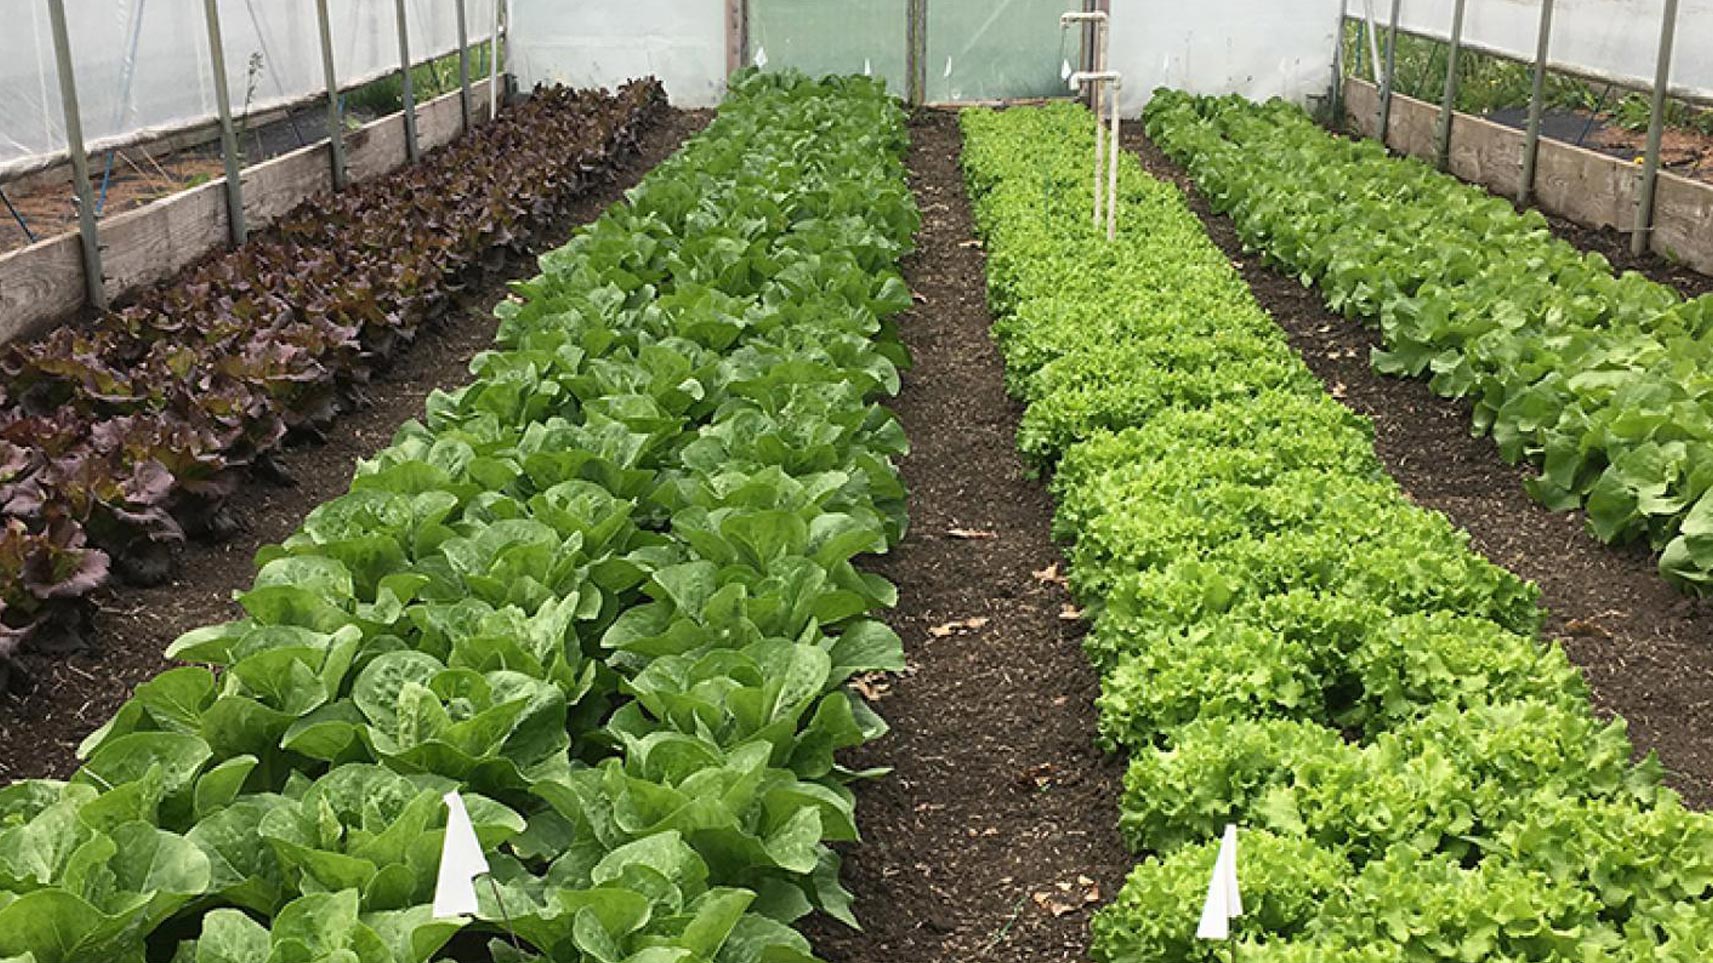 Vegetable Crop Production and Management – Professional Development